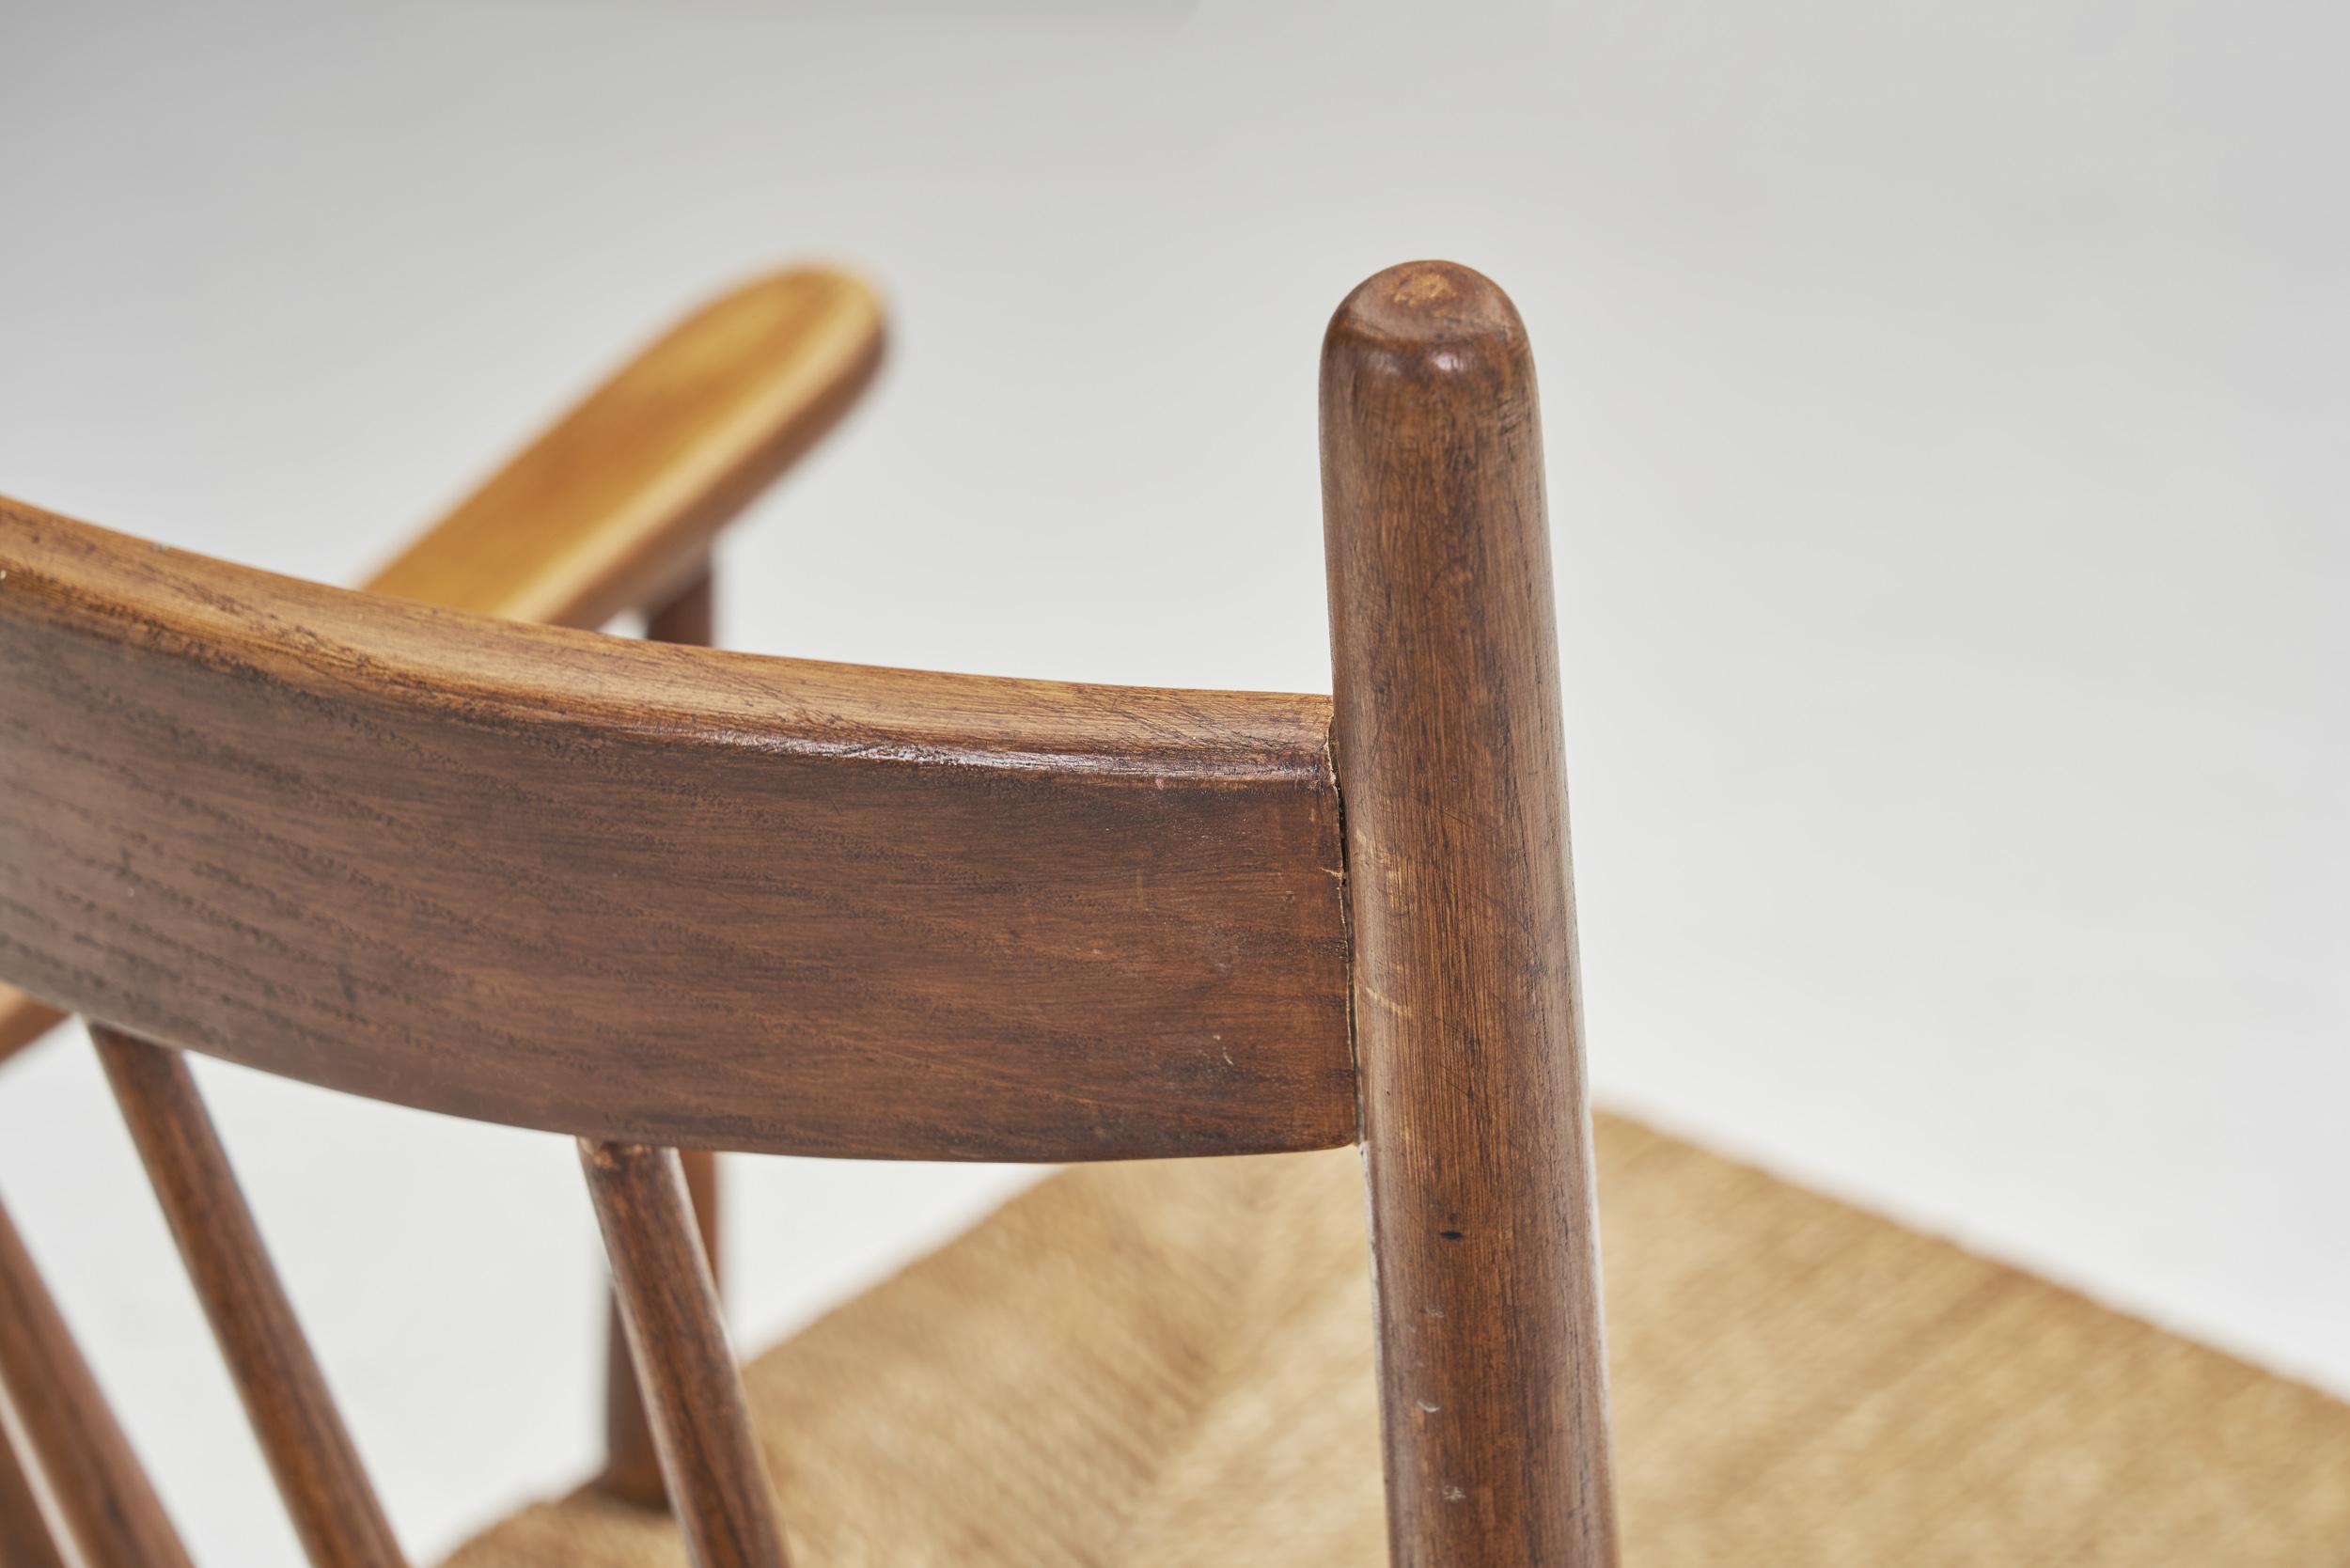 Teak Slatback Chairs with Woven Danish Cord Seats, Denmark ca 1960s For Sale 2